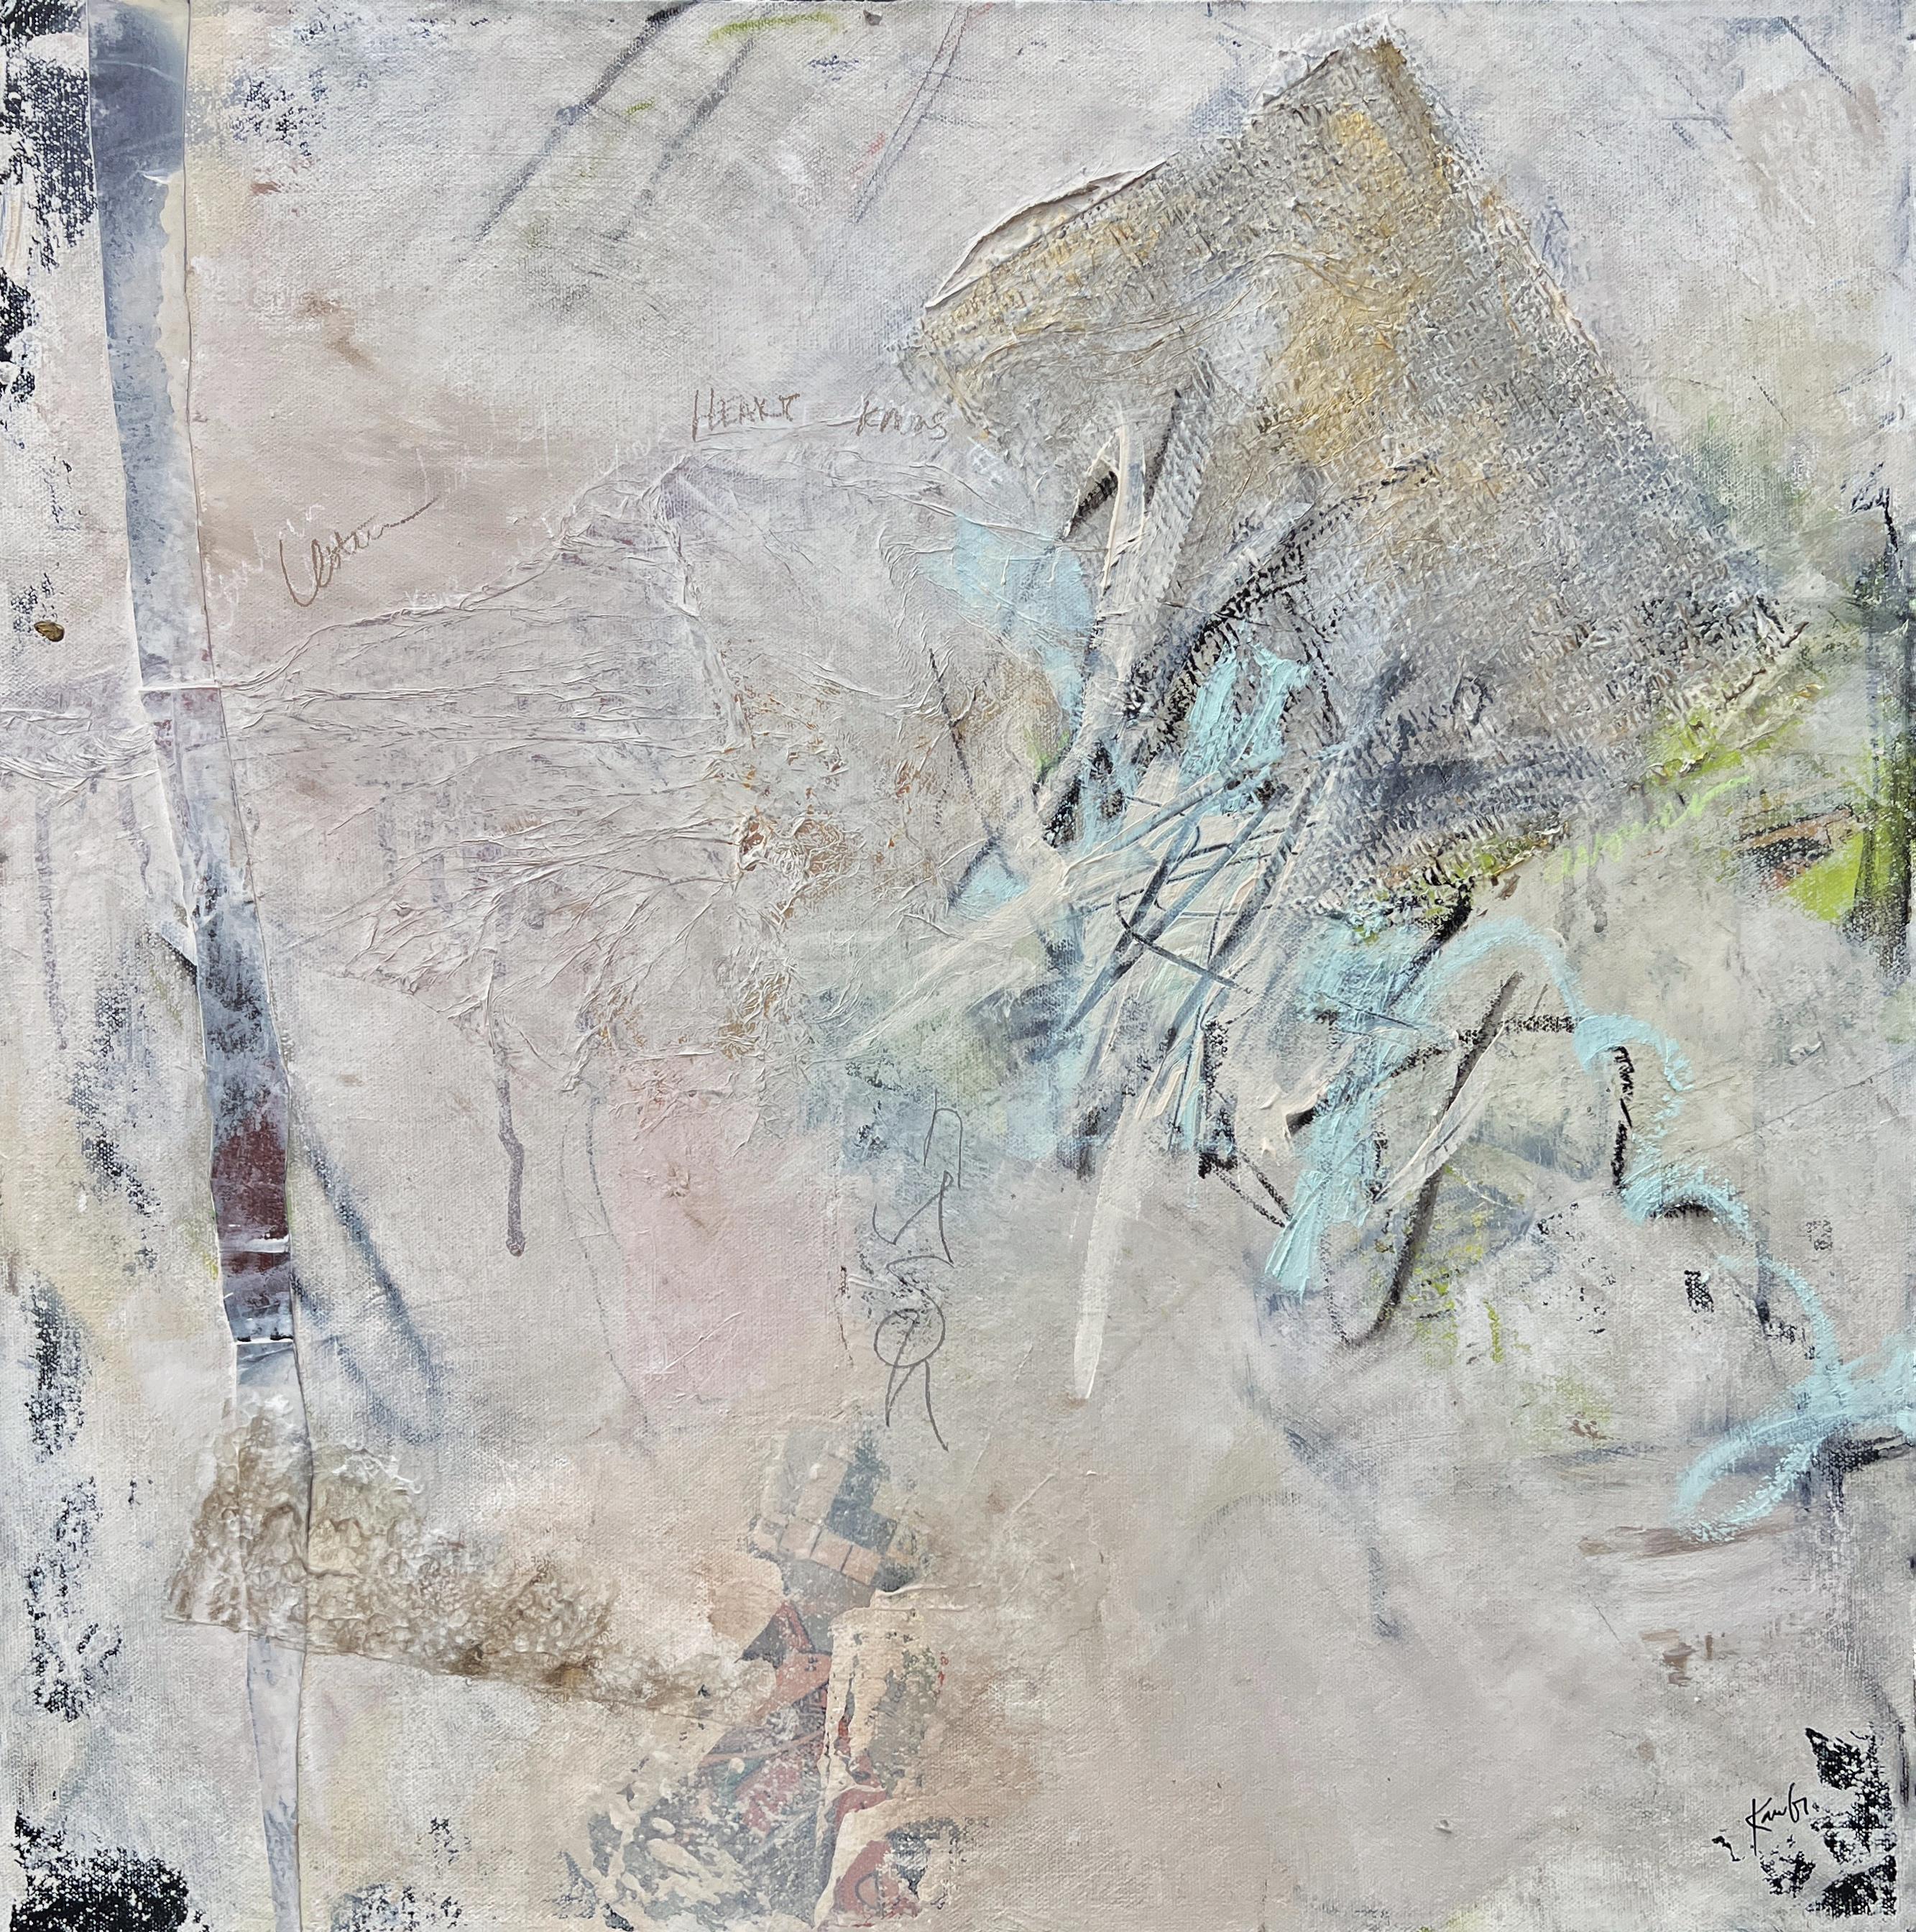 Kara Greenwell Abstract Painting – "Drowning Out the Crowd" - Neutrale zeitgenössische abstrakte Malerei 2022